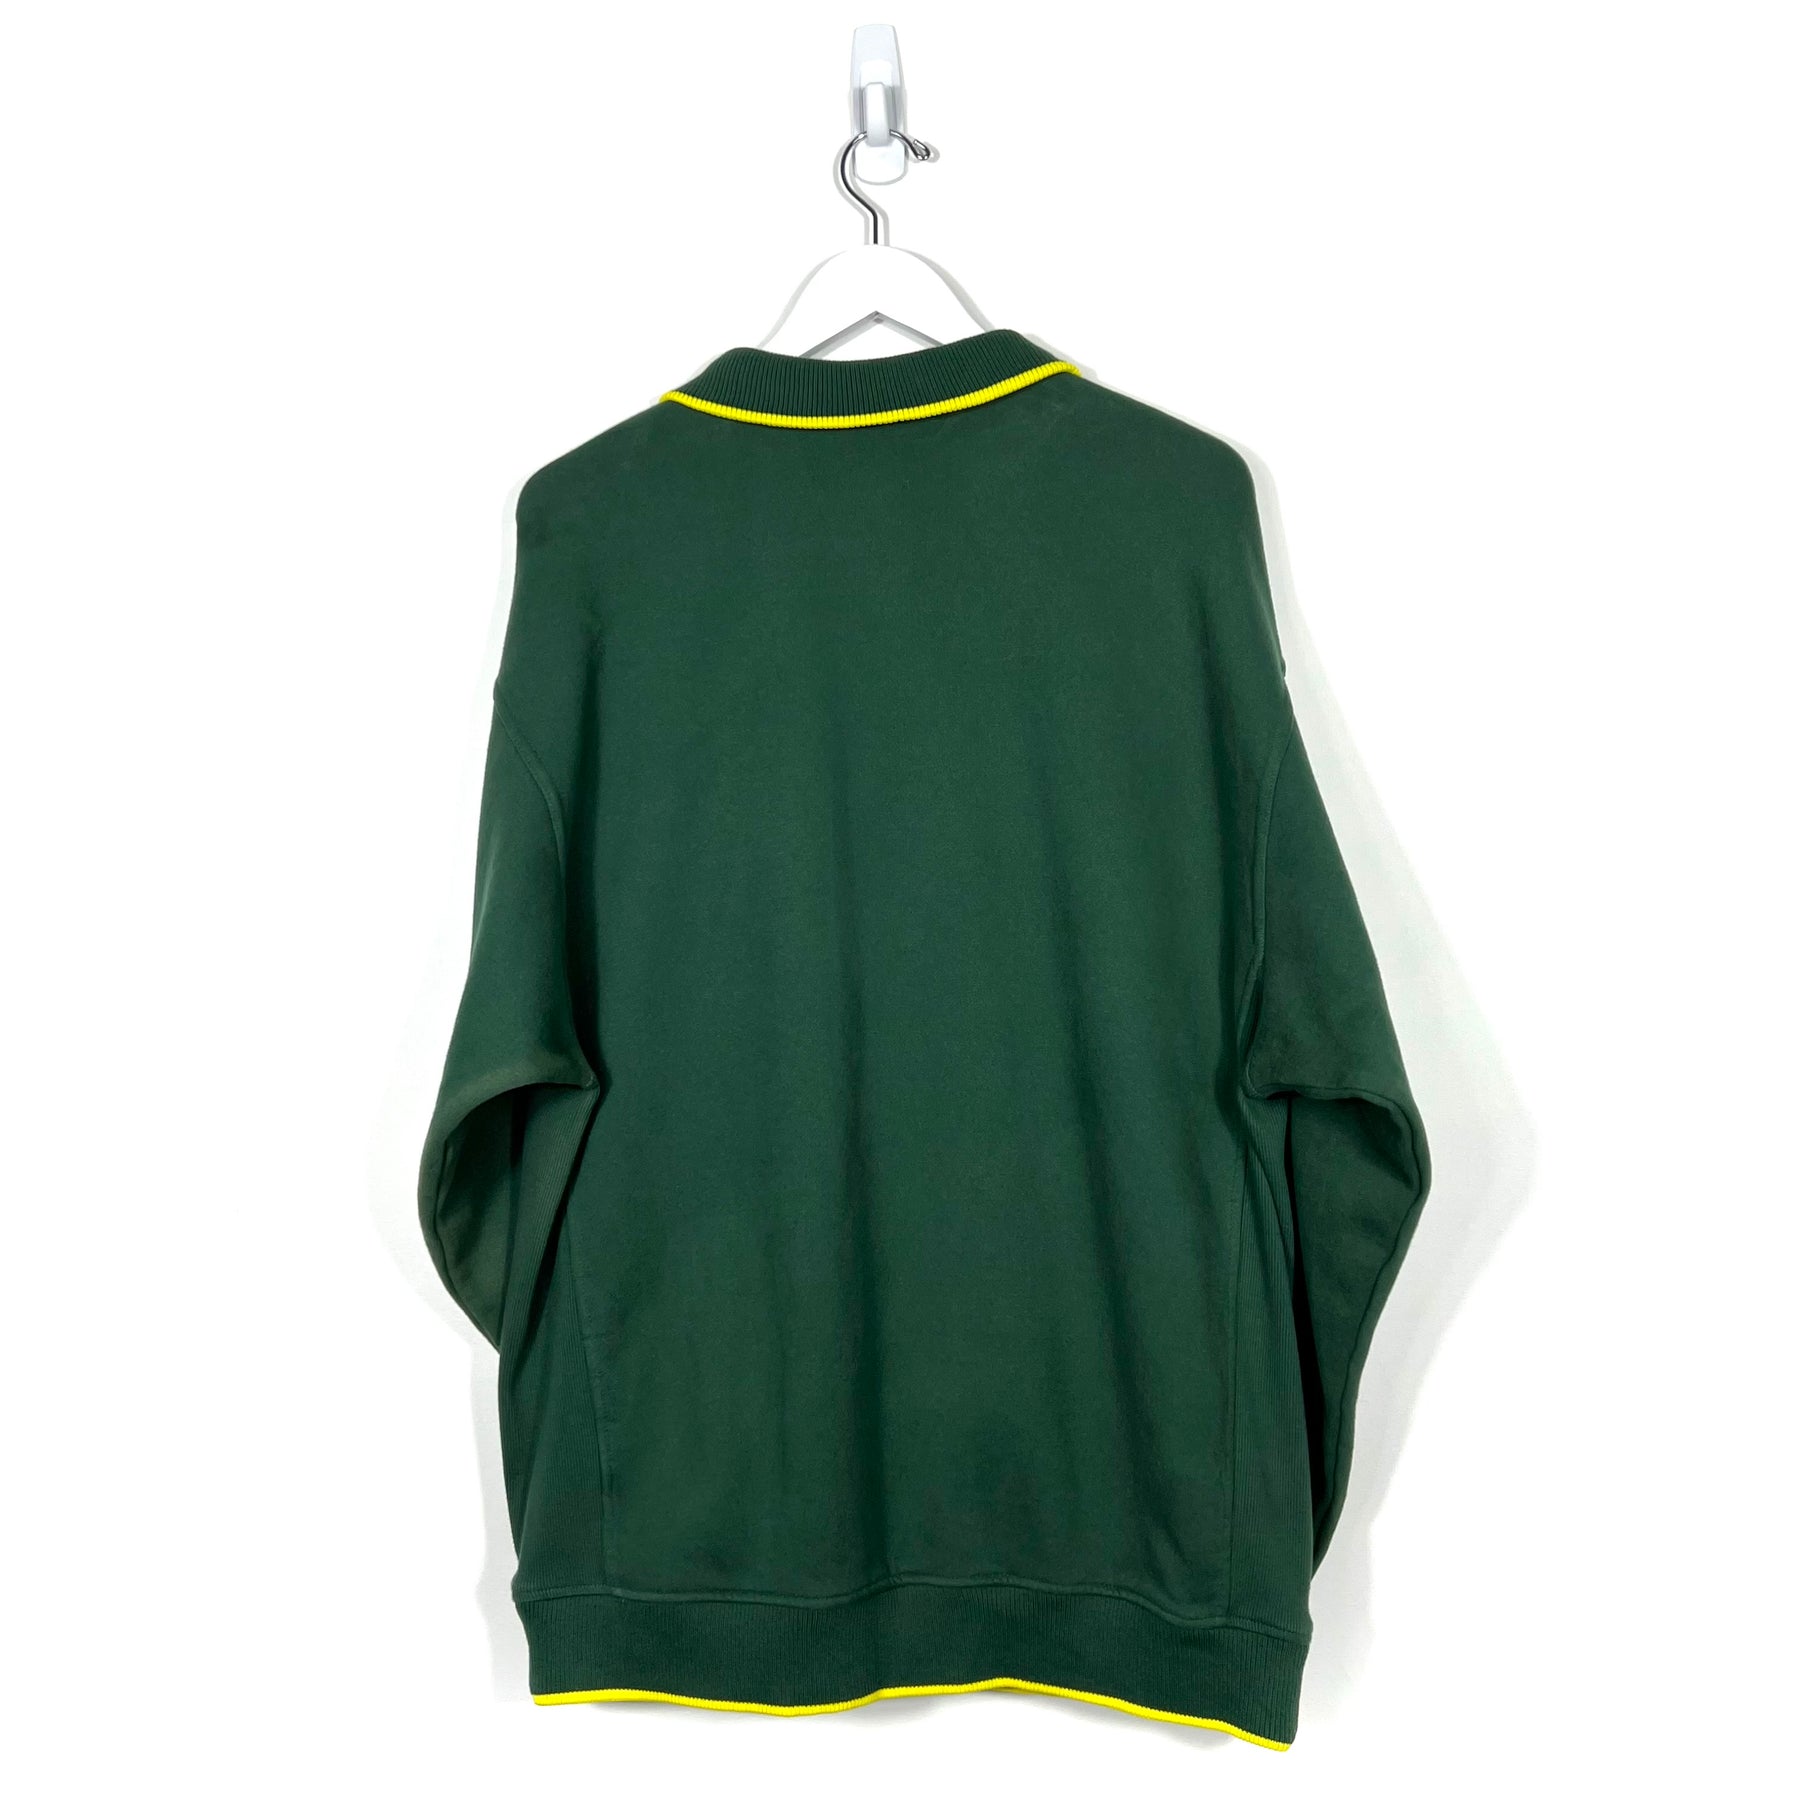 Vintage Nike University of Oregon 1/4 Zip Sweatshirt - Men's Large